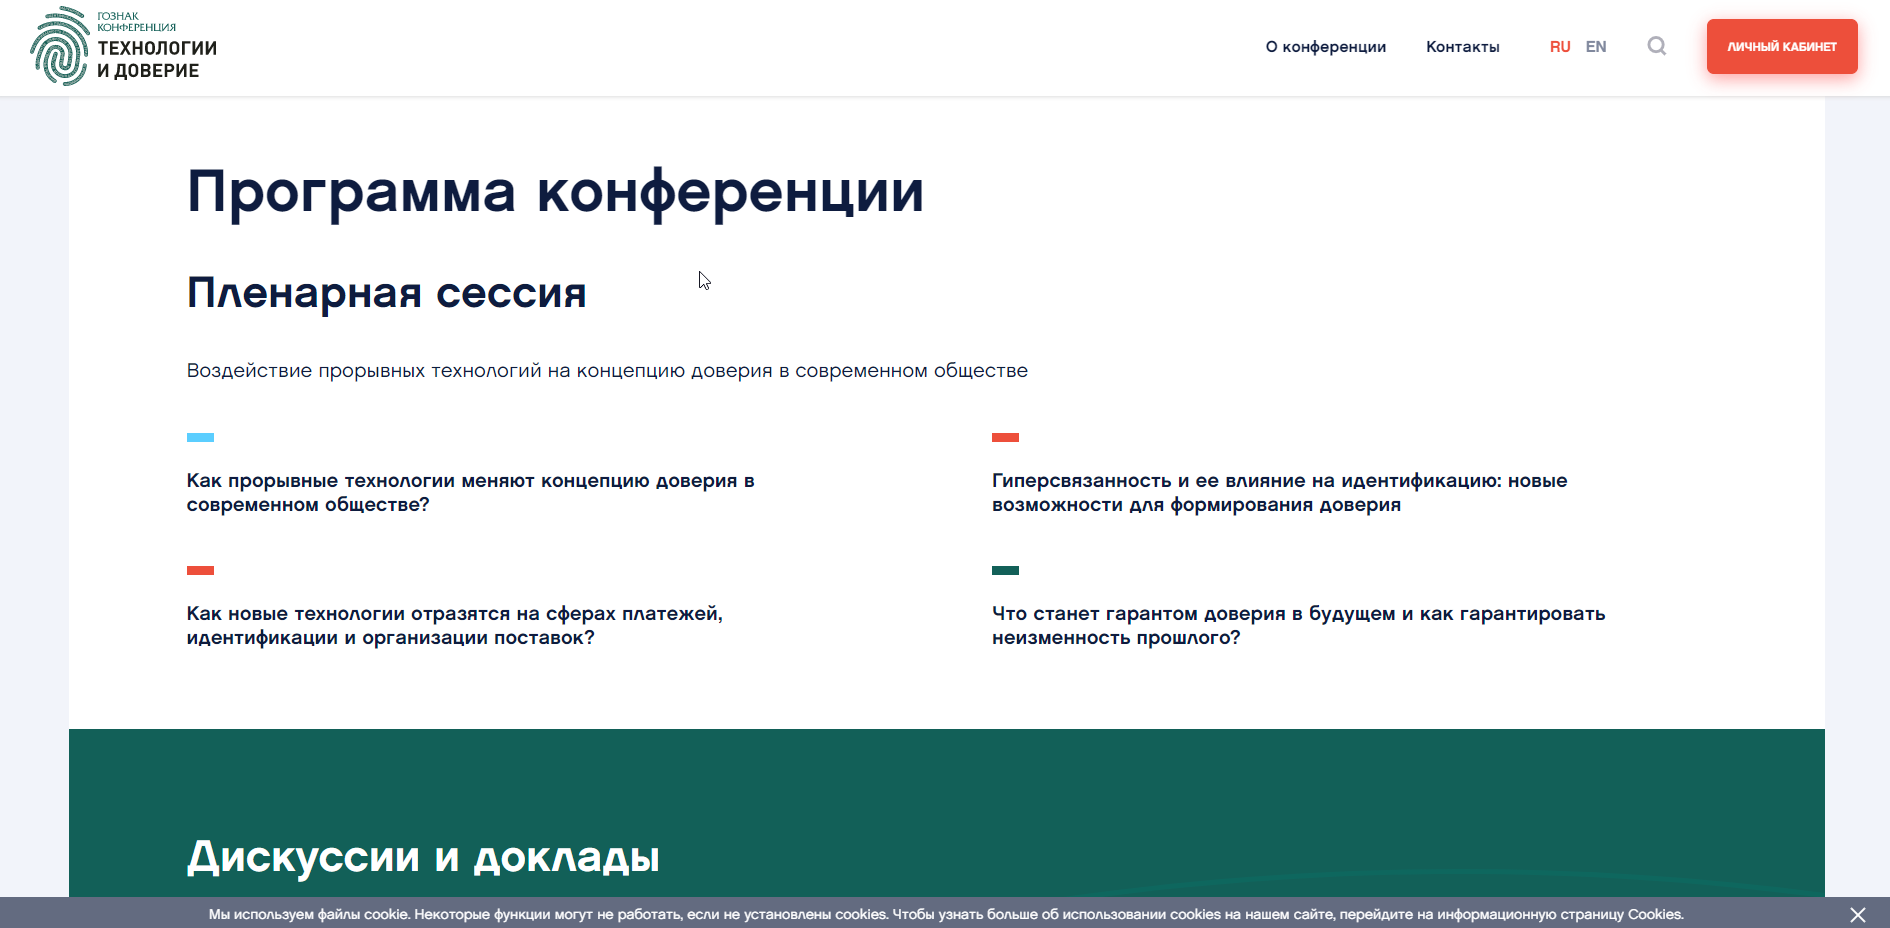 trustconference.ru